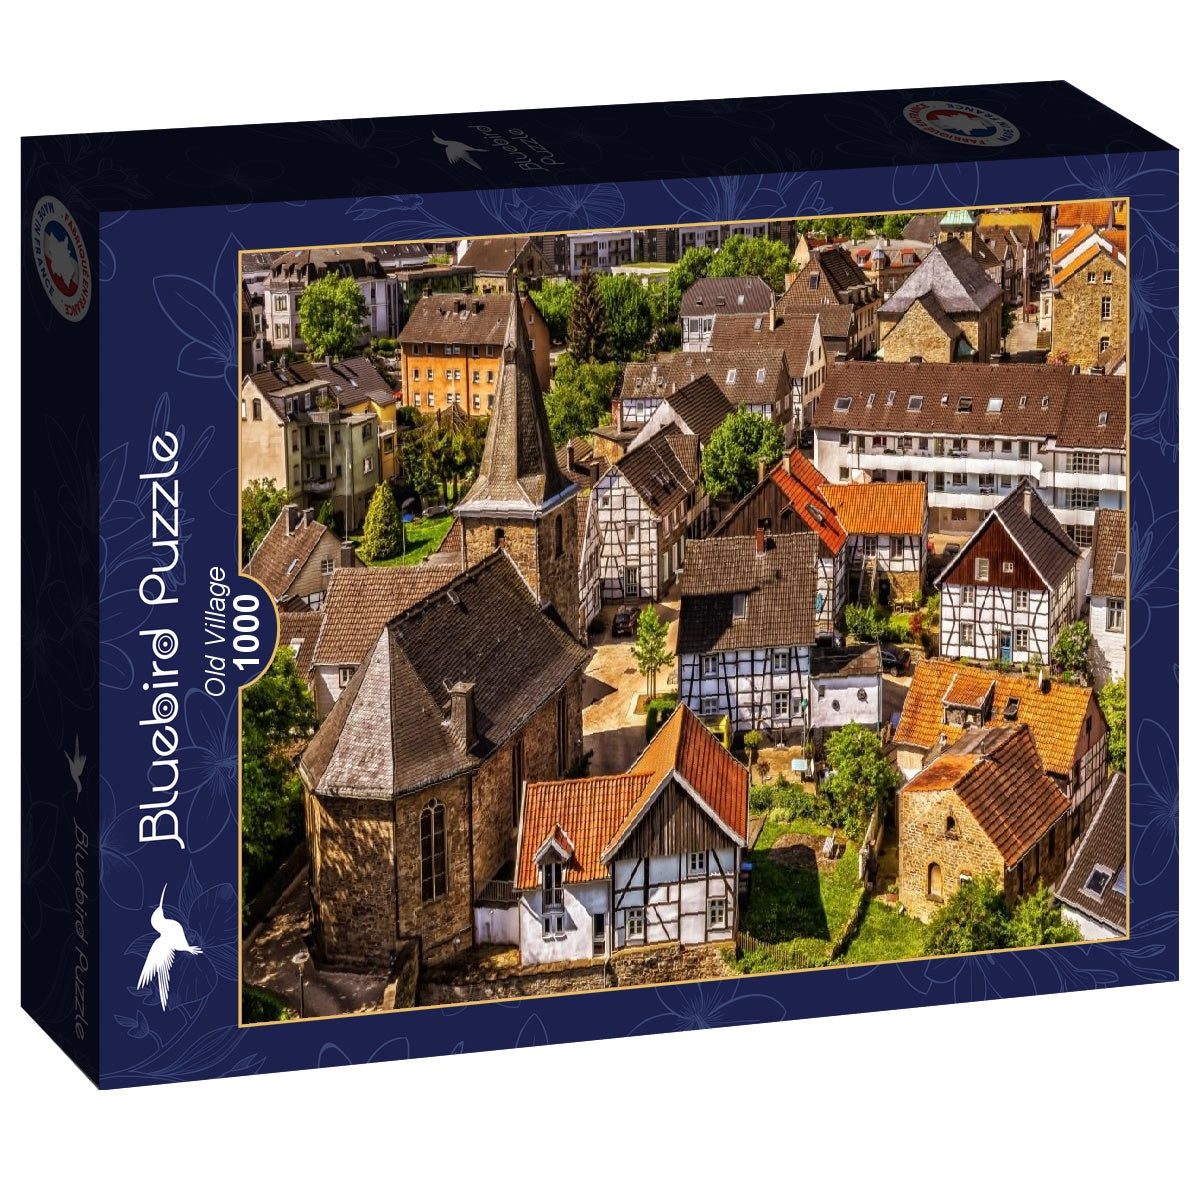 Bluebird Puzzle - Old Village - 1000 Piece Jigsaw Puzzle